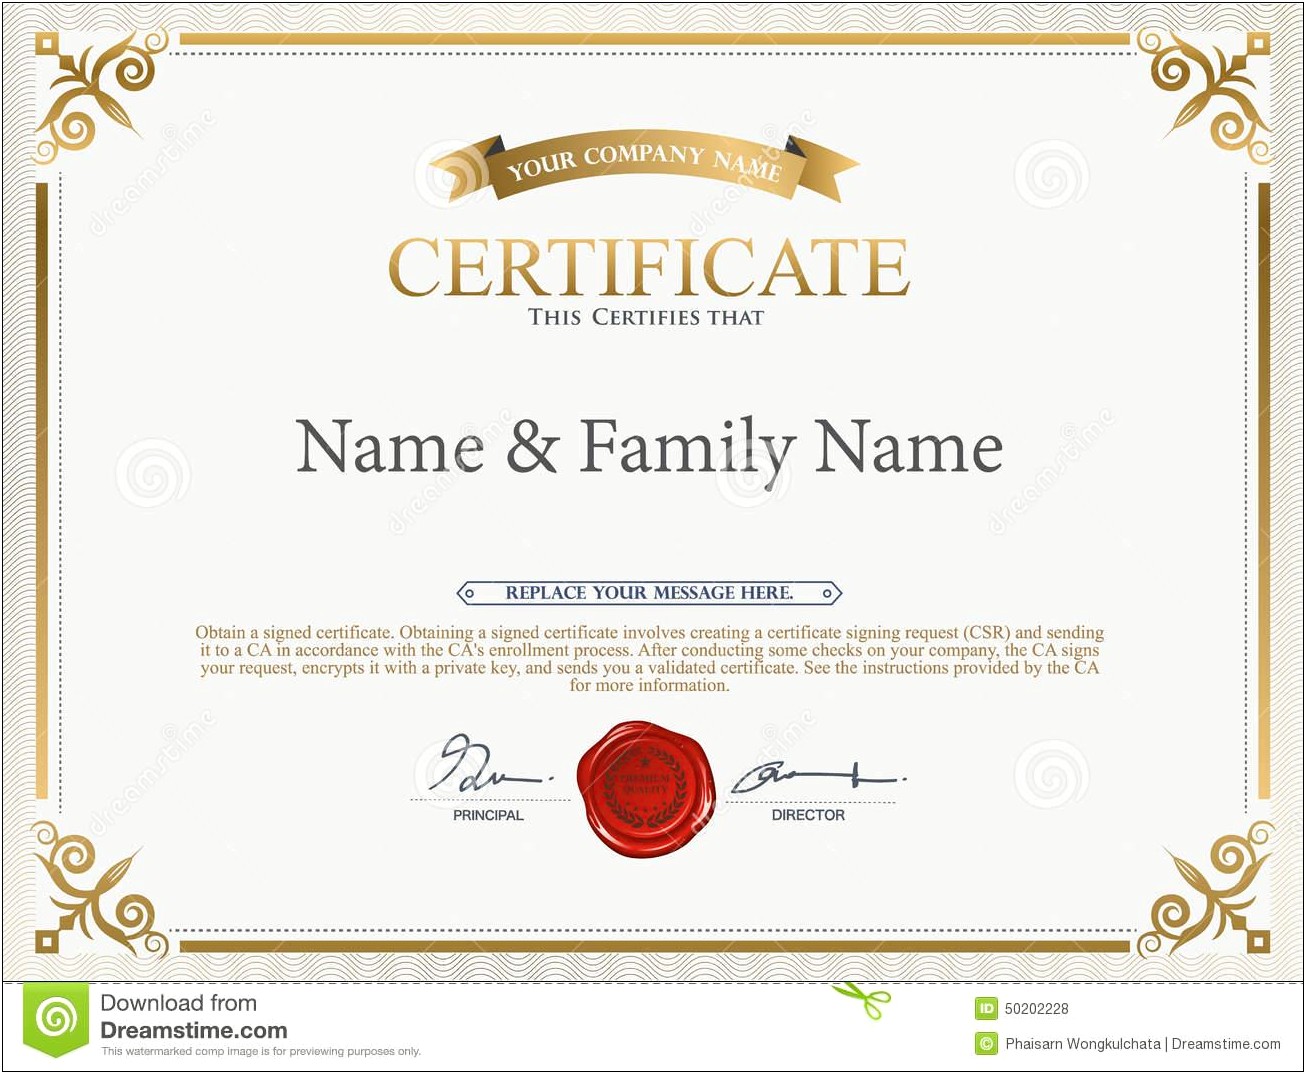 Certificate Template Ai File Free Download